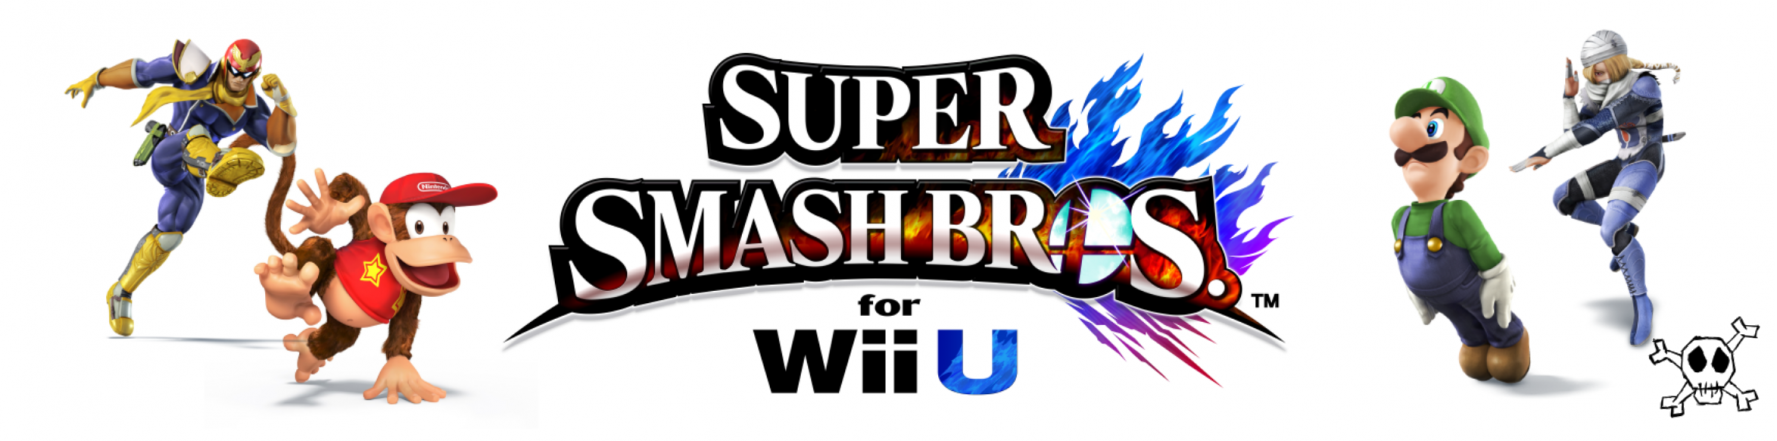 Super Smash Bros. (Wii U)